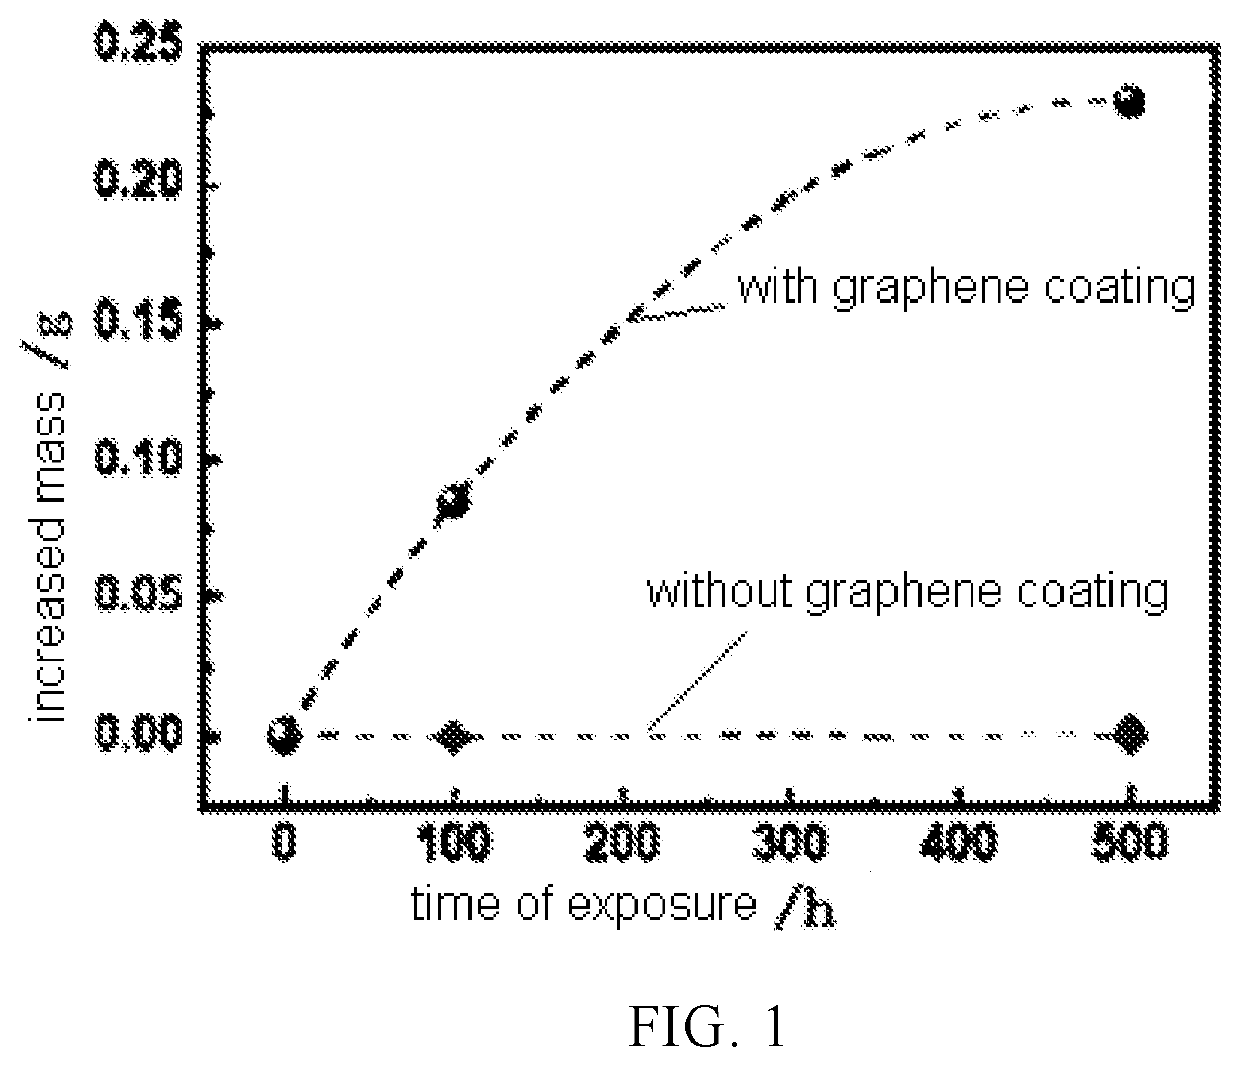 Method of preparing graphene coating on metal surface